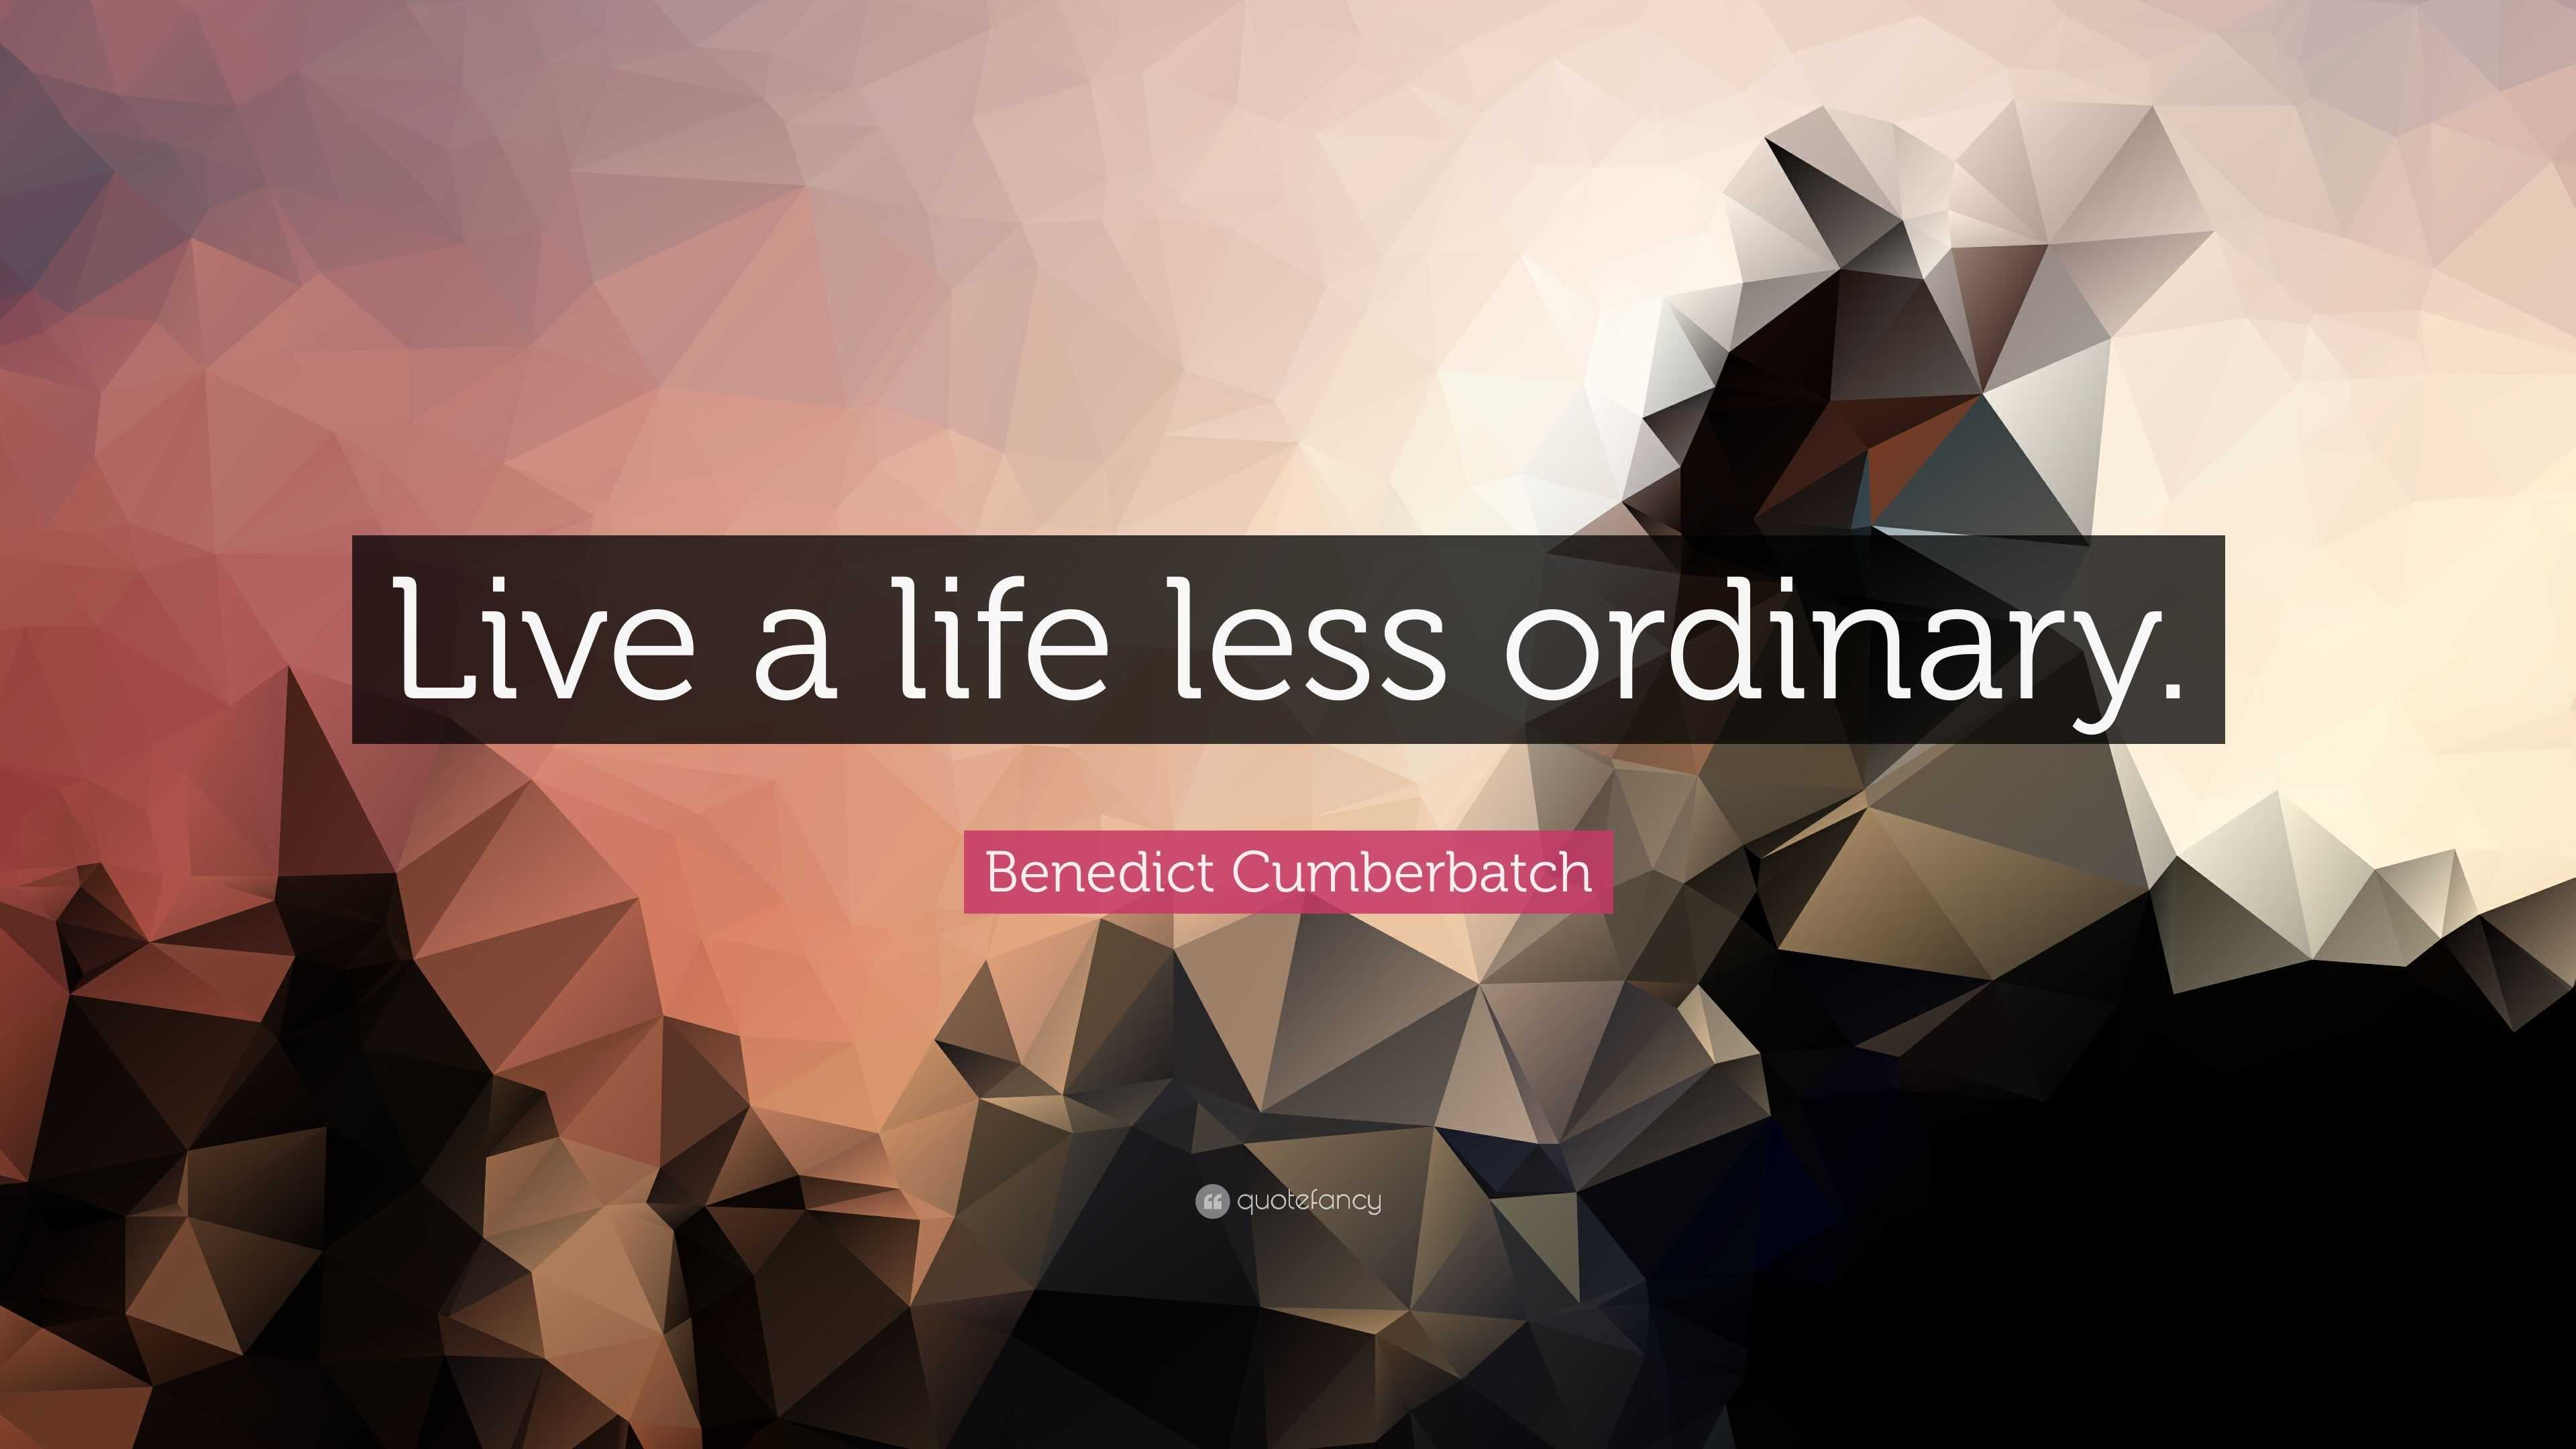 Benedict Cumberbatch Quote: “Live A Life Less Ordinary.”